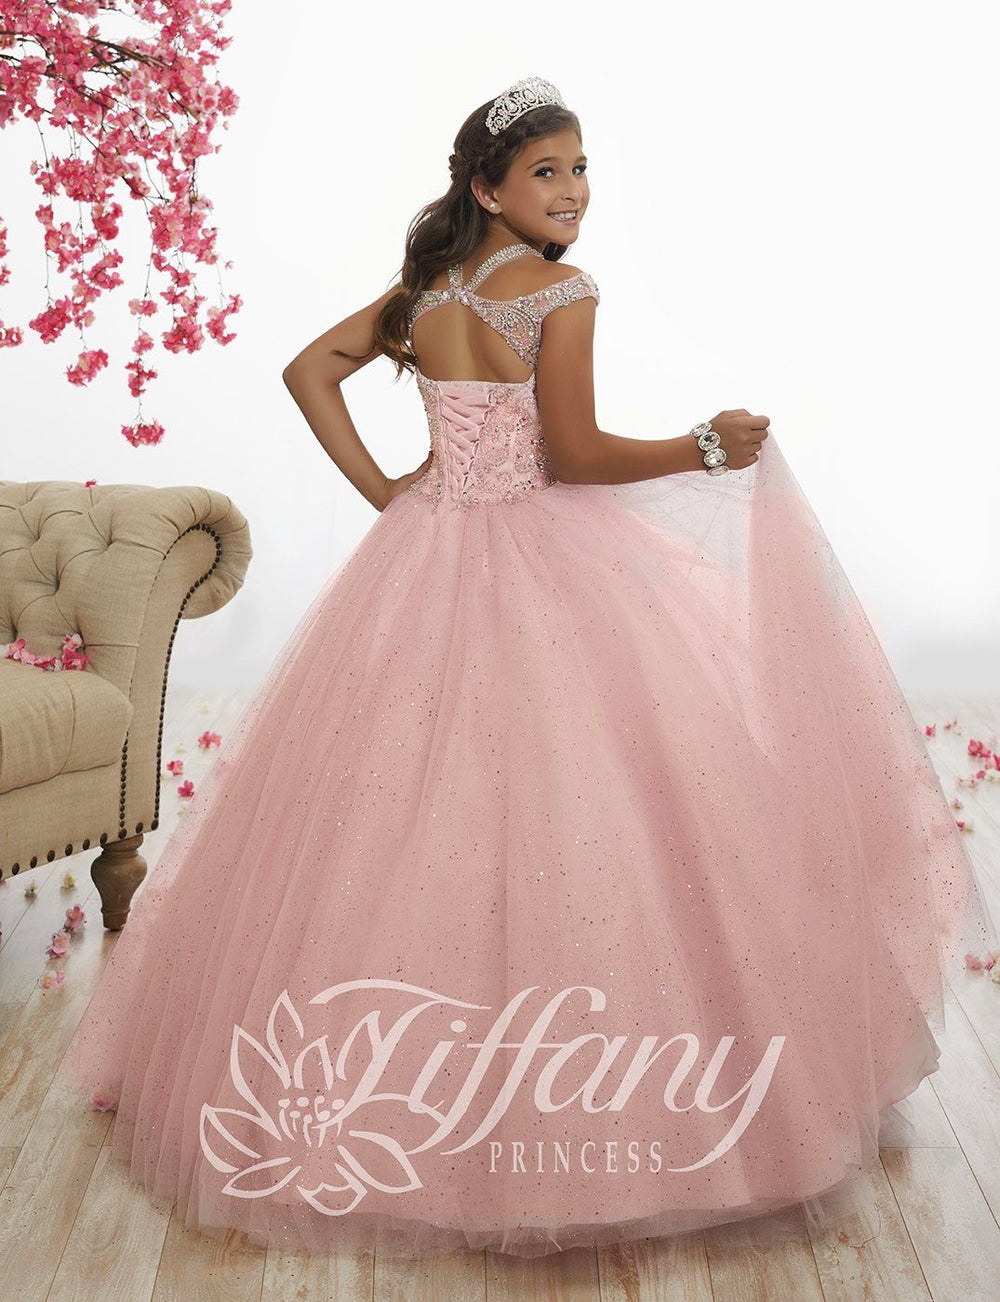 Girls Long Cold Shoulder Dress by Tiffany Princess 13525-Girls Formal Dresses-ABC Fashion